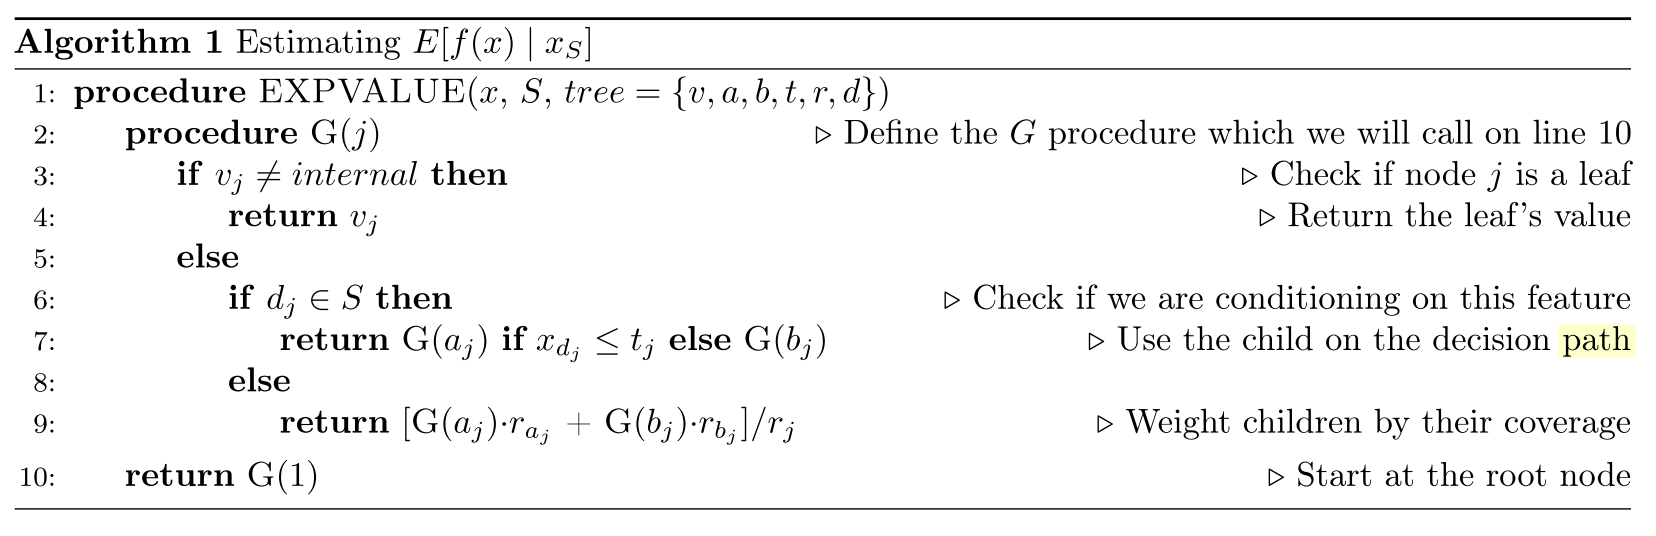 Naive TreeSHAP Algorithm